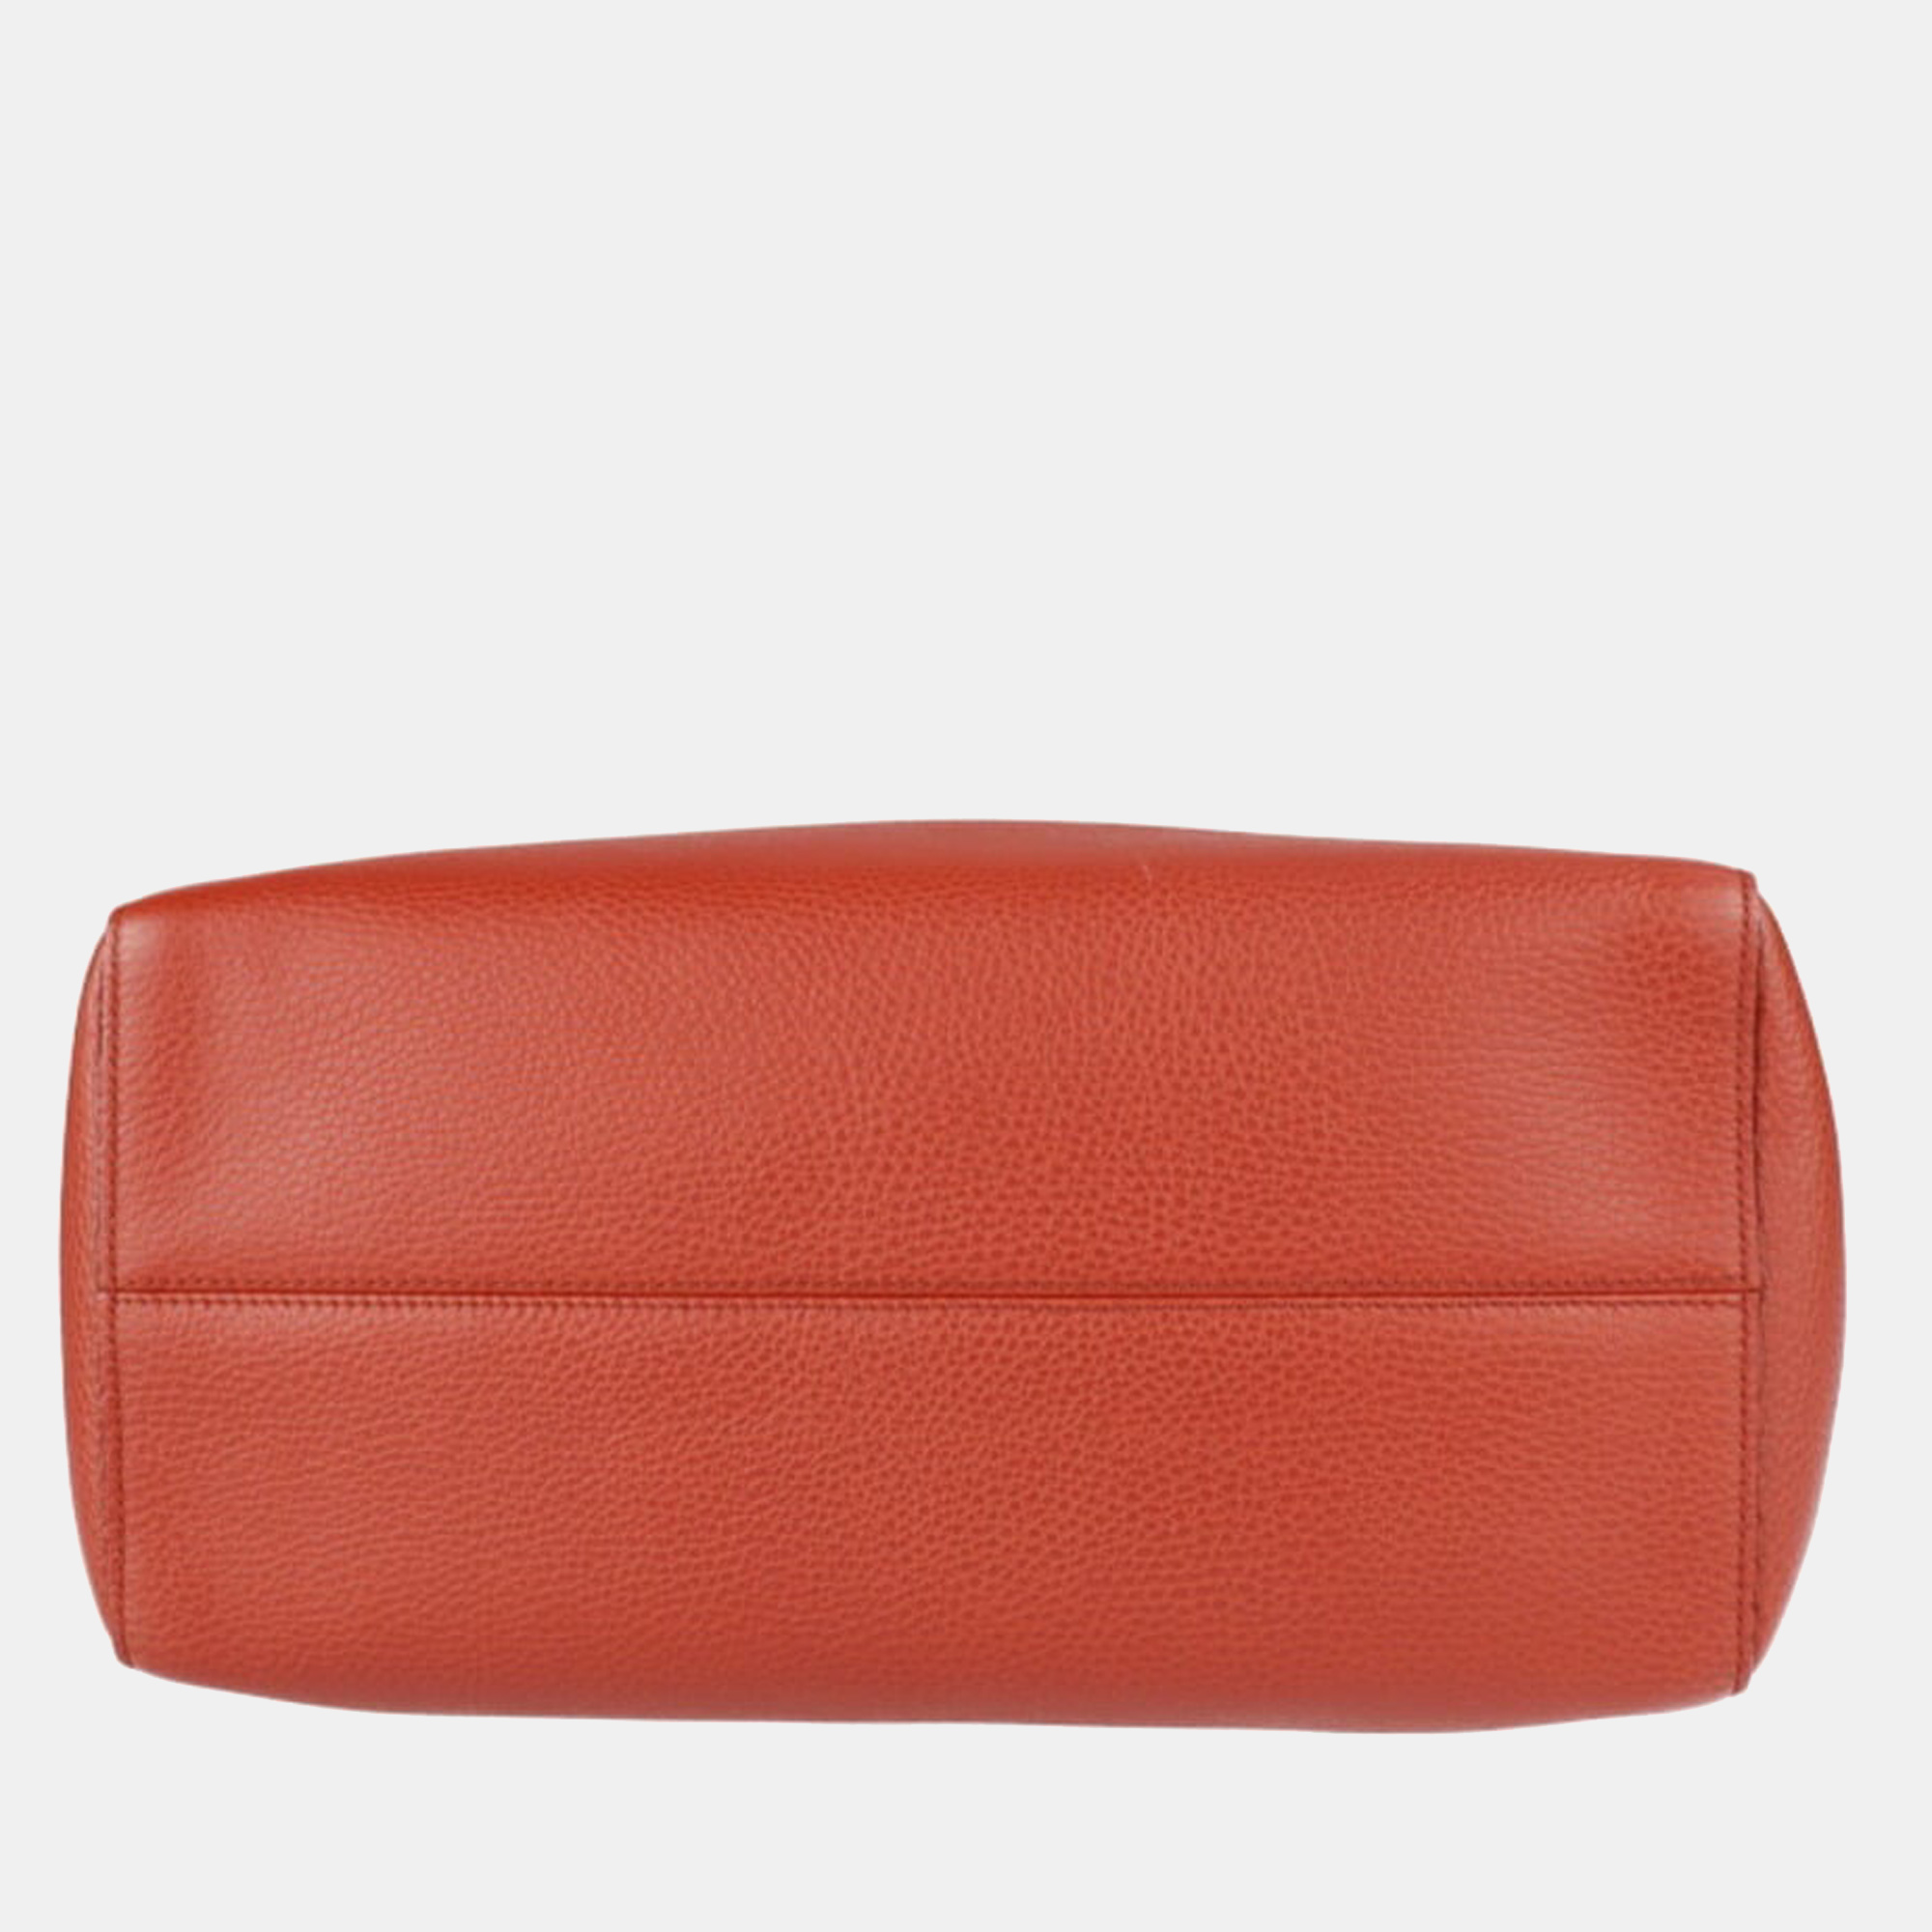 Gucci Orange Leather Medium Swing Tote Bag